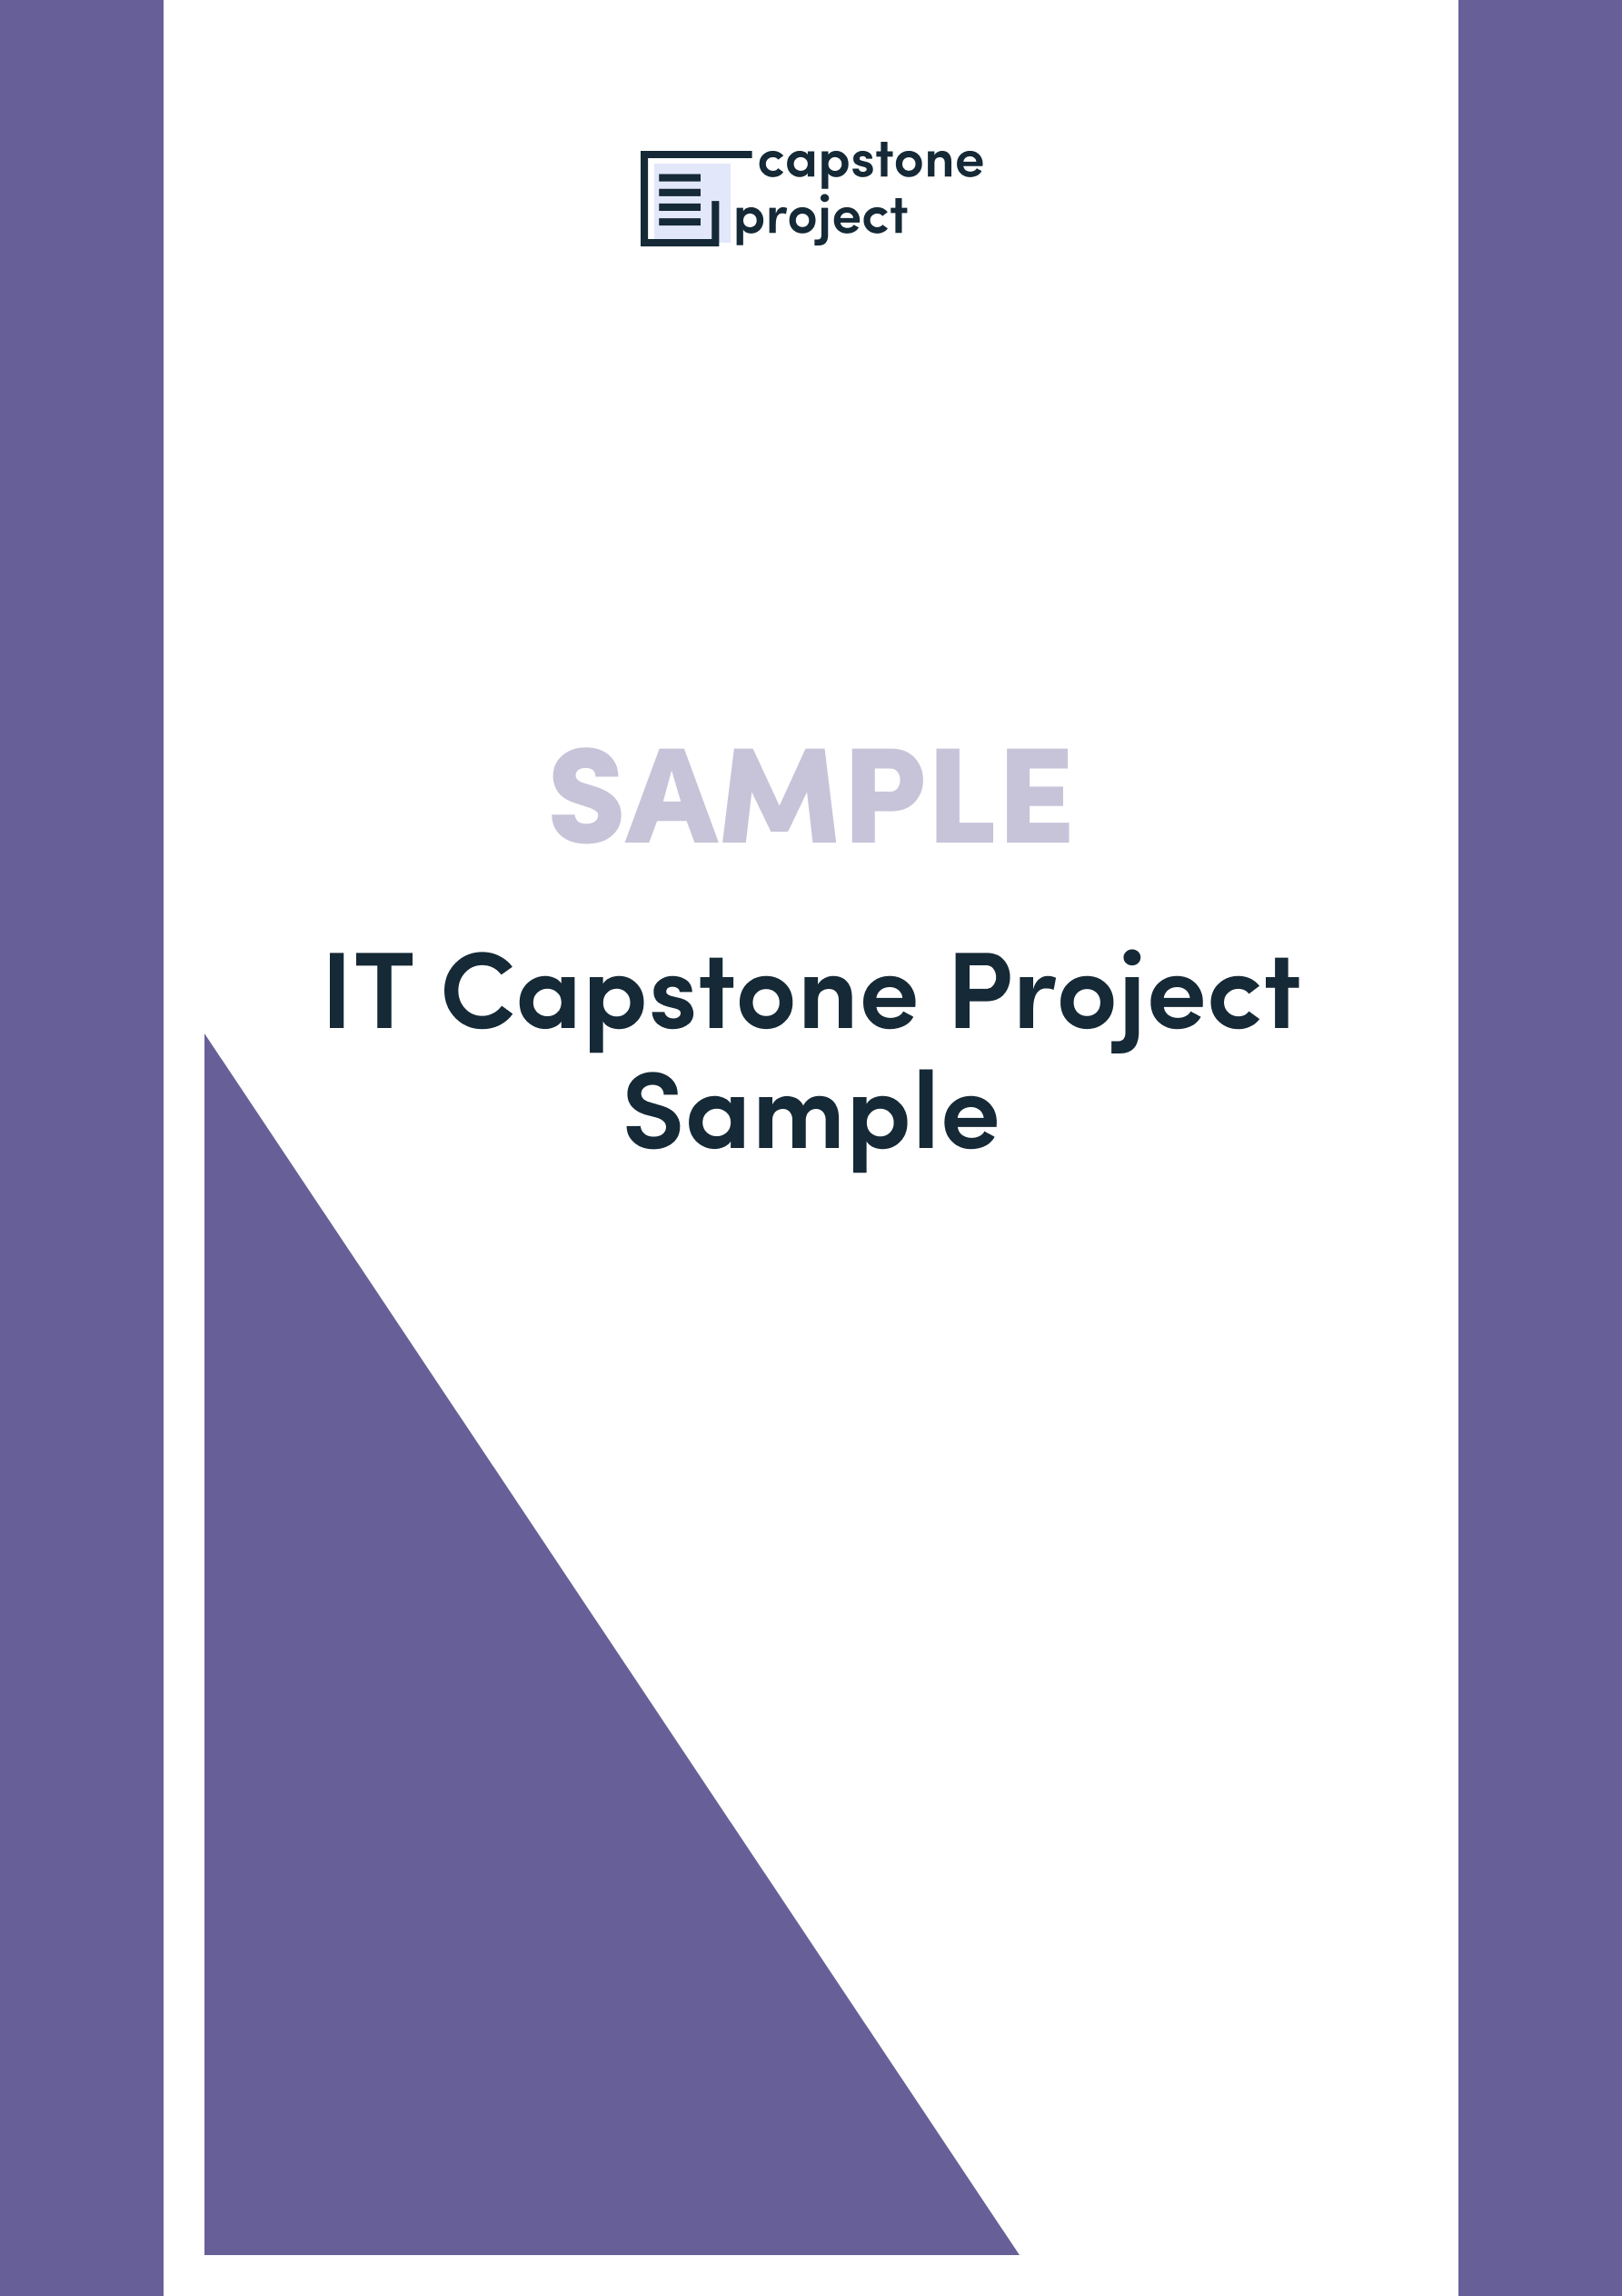 capstone project on big data